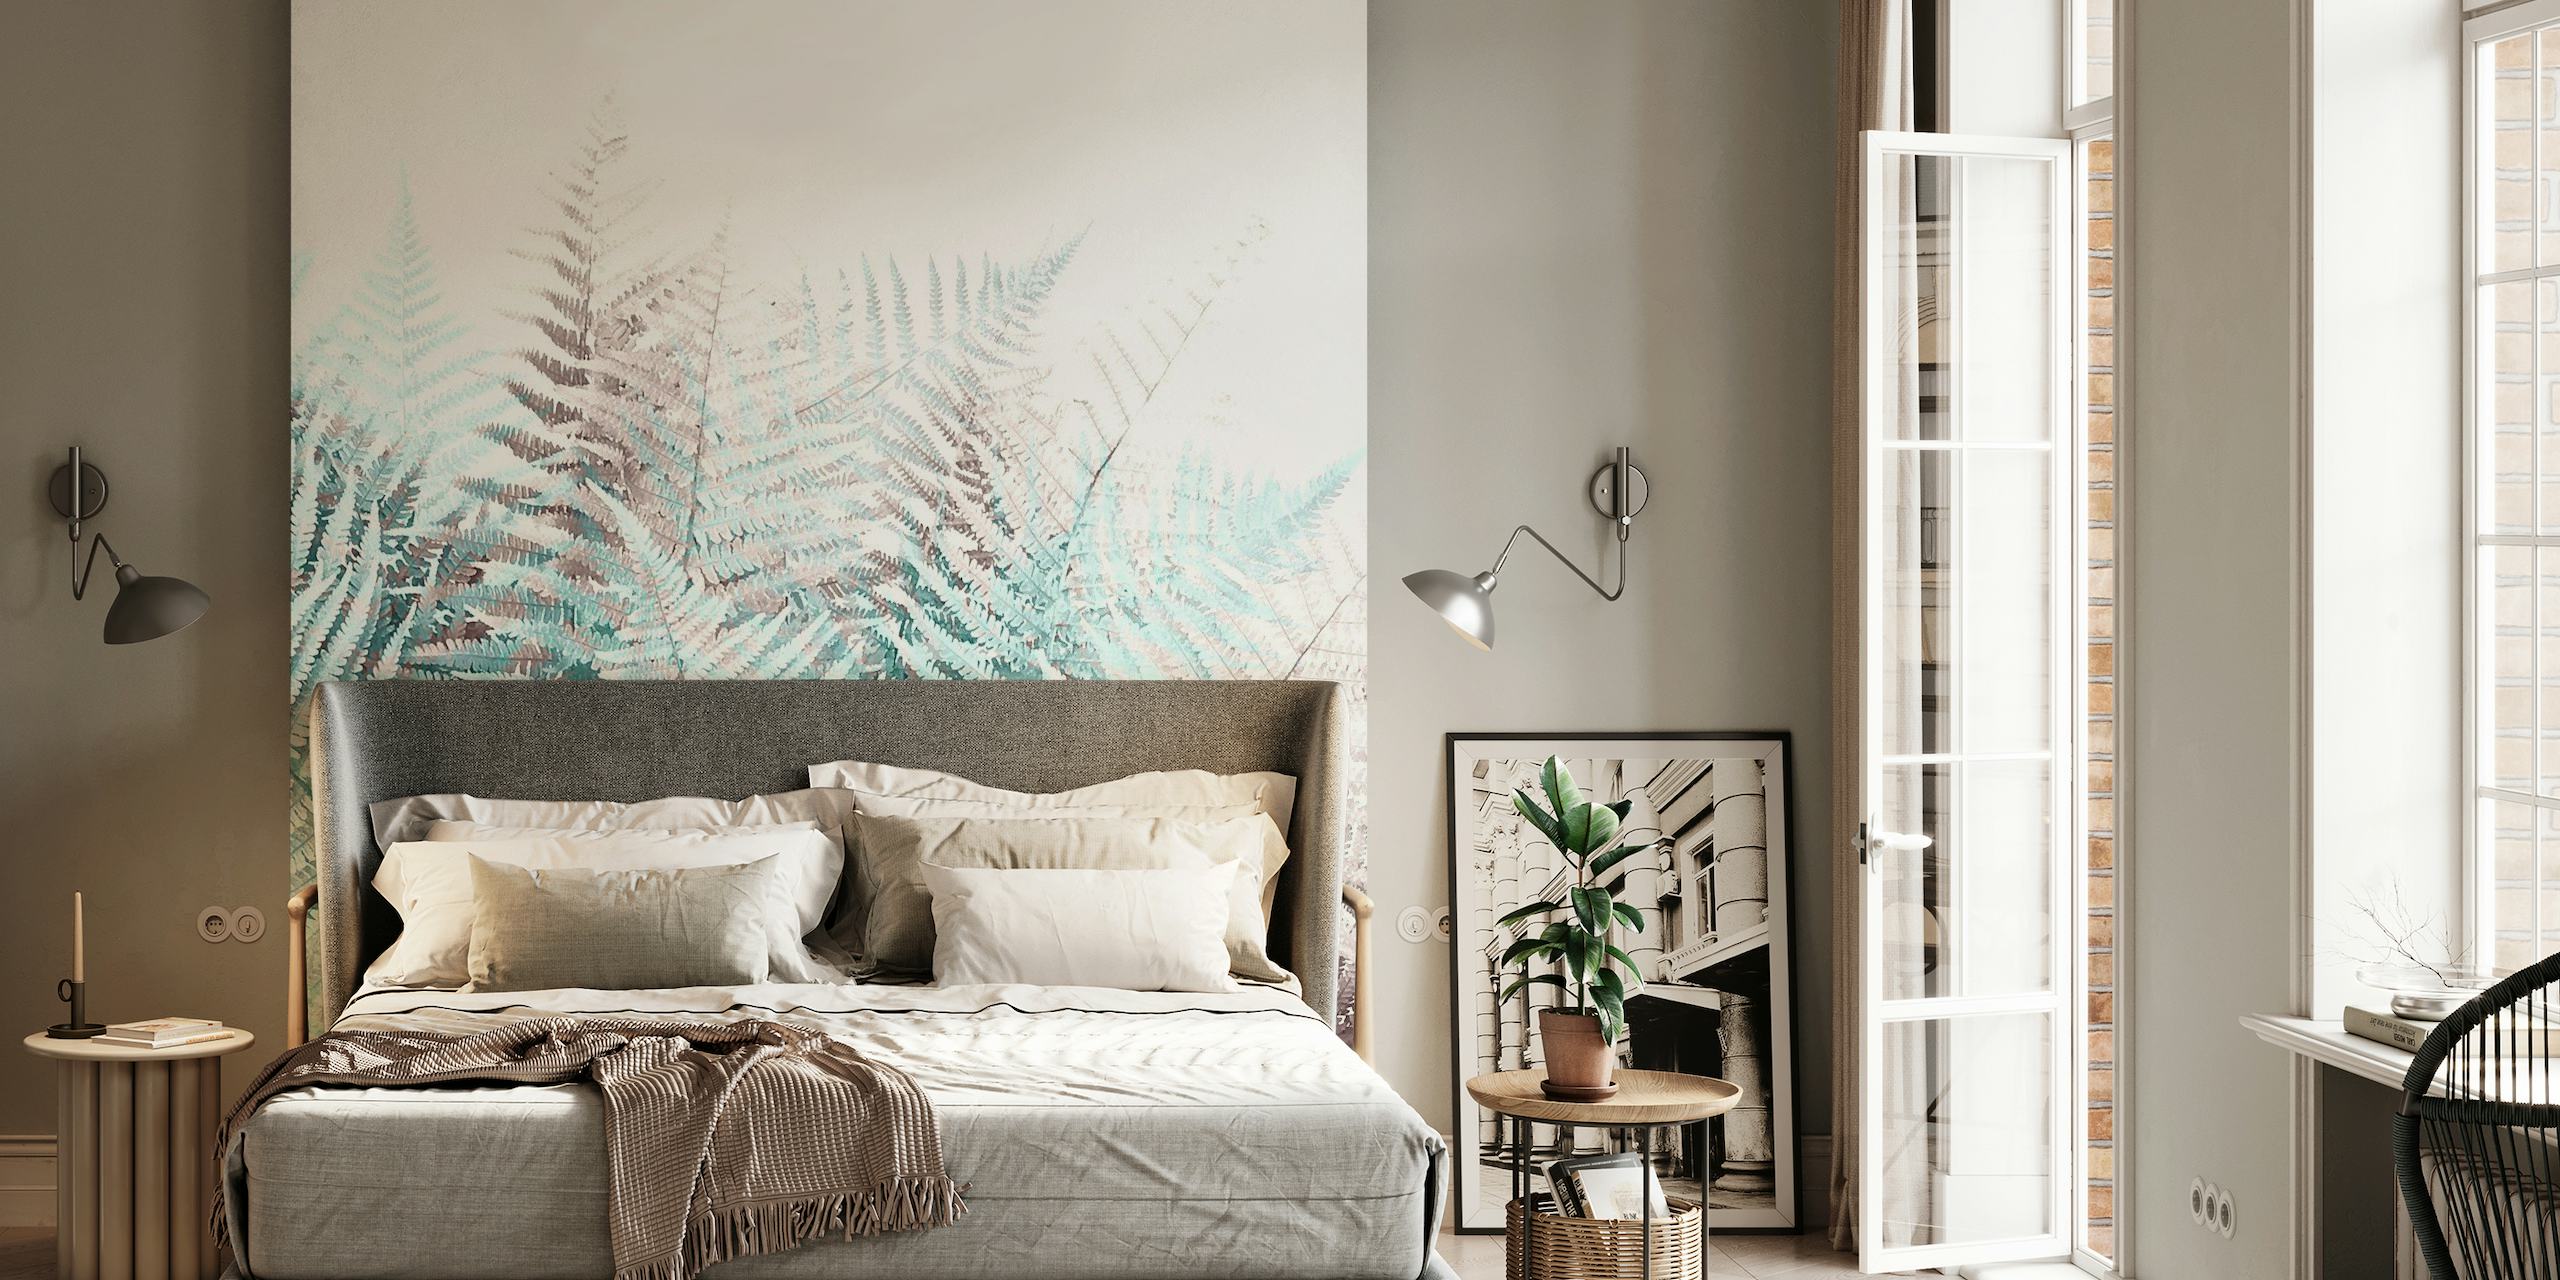 Soft Fern Foliage Duotone Wall Mural with aqua and blush tones